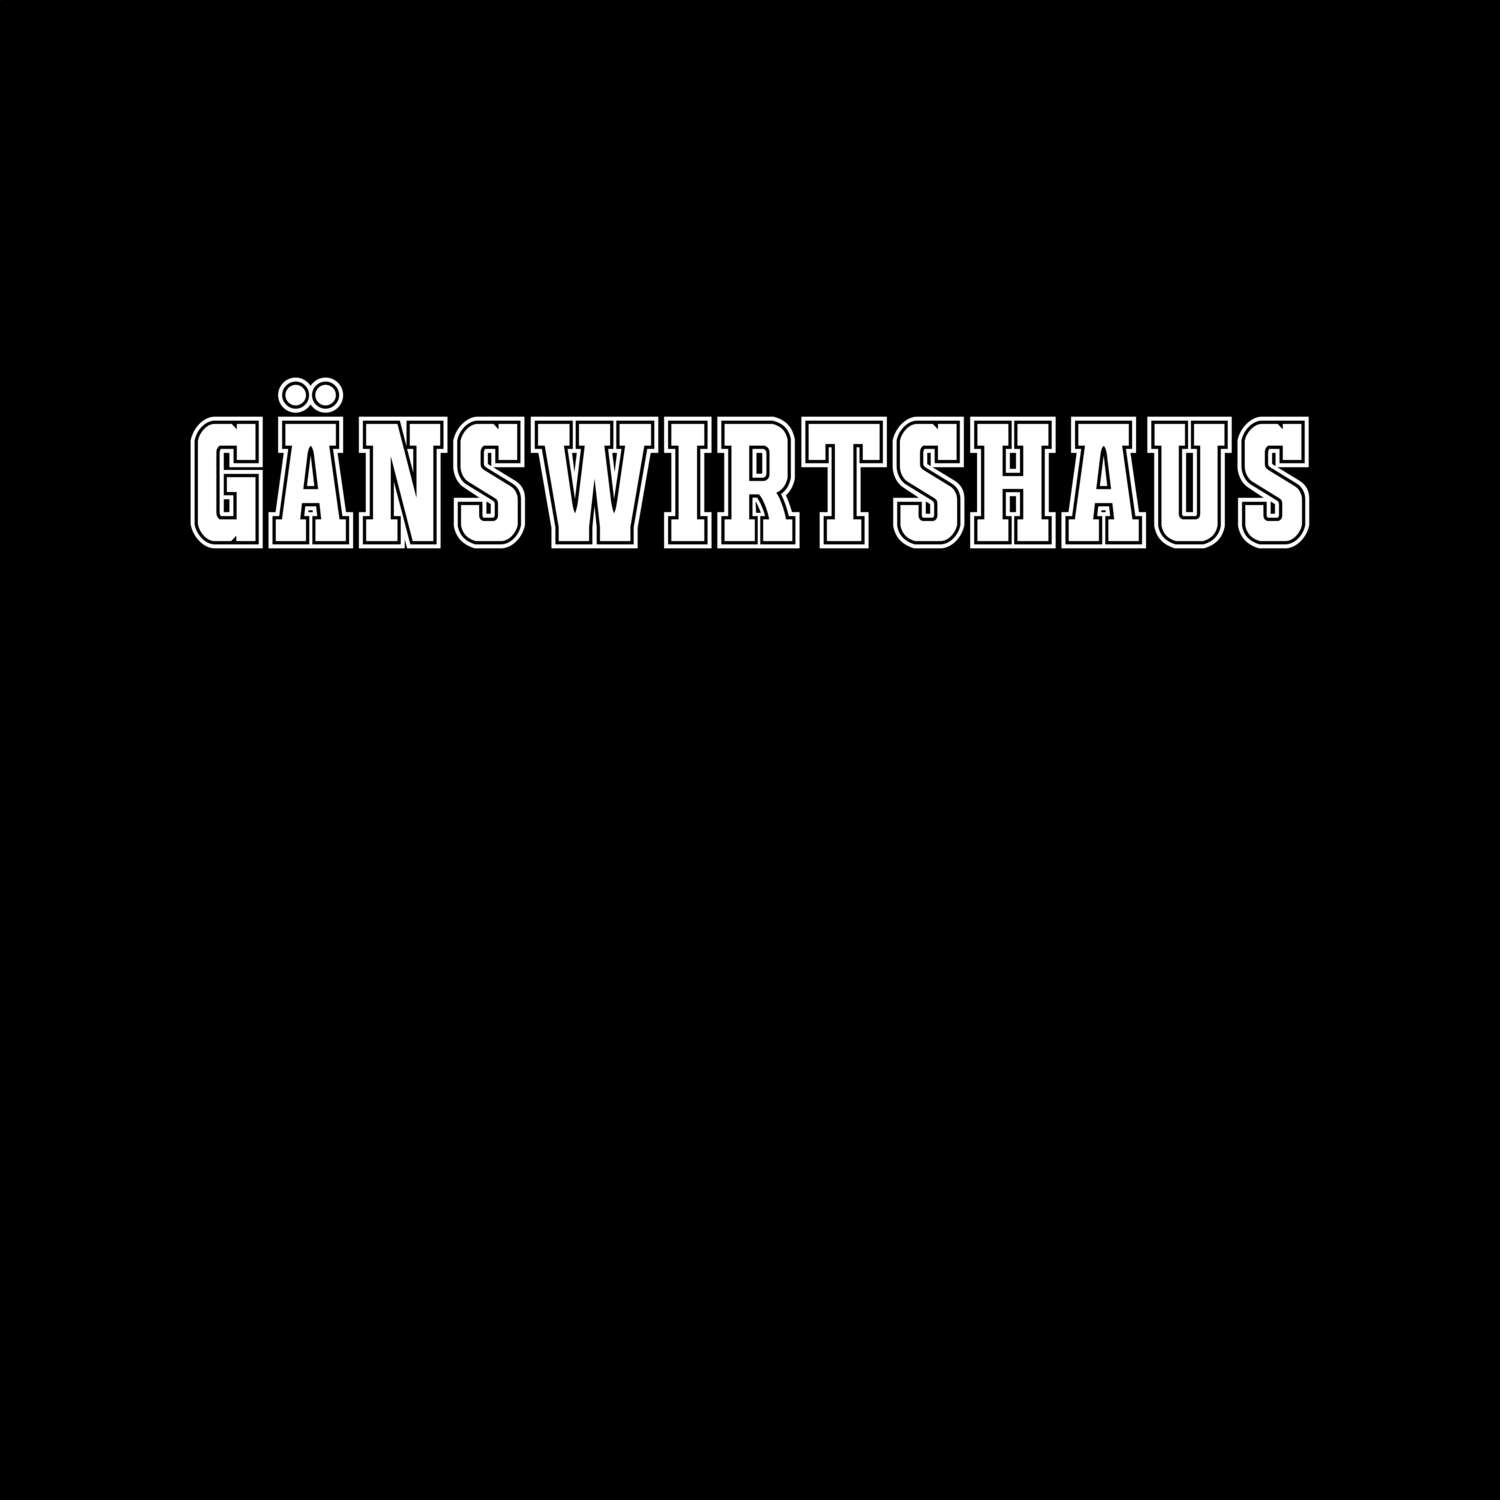 Gänswirtshaus T-Shirt »Classic«